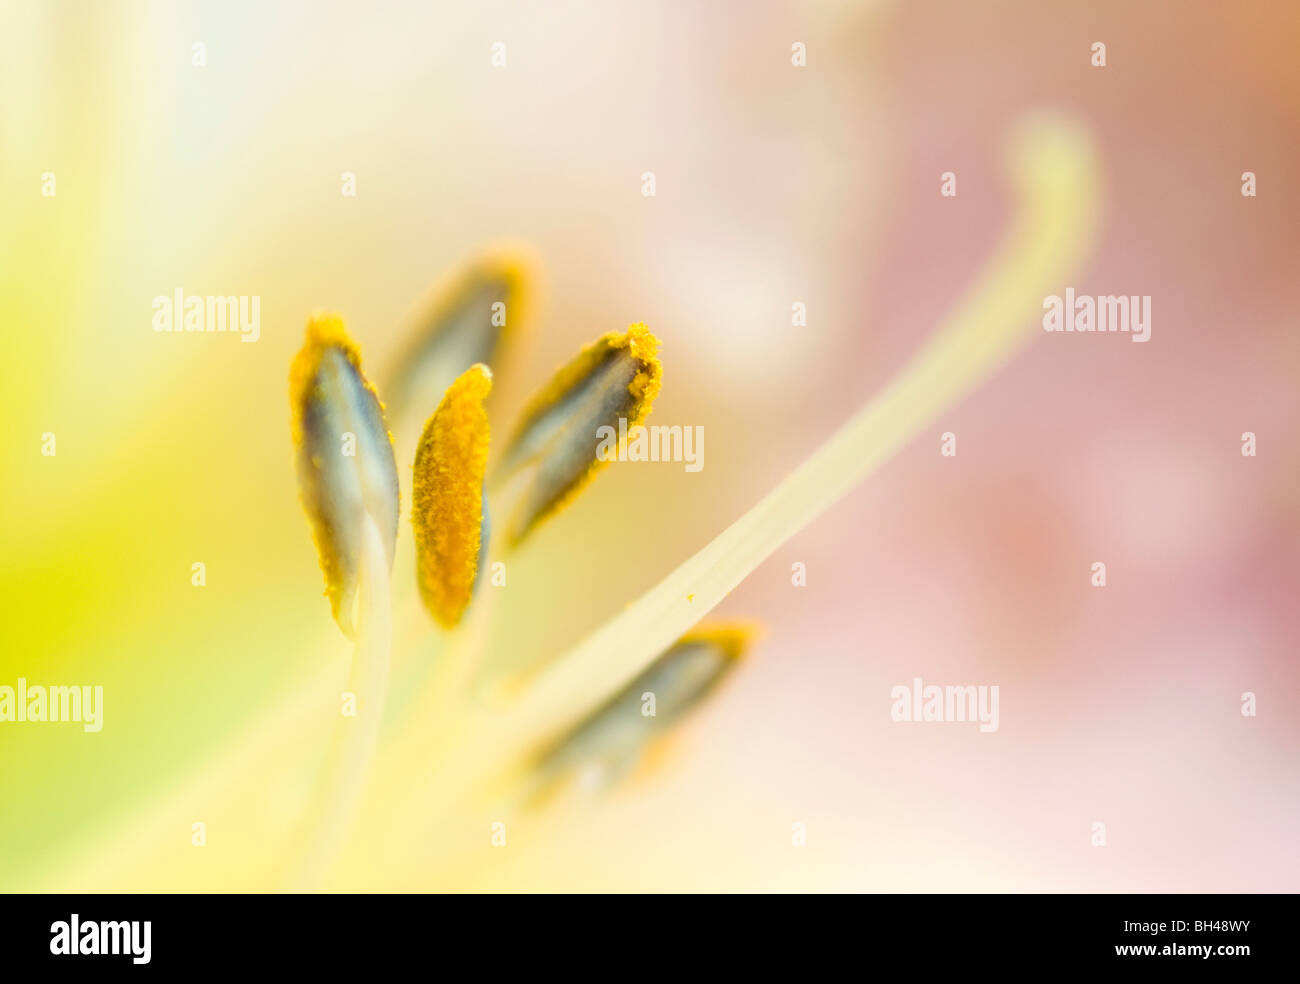 Lily stami. Creative close up immagine astratta di stami in soft focus. Foto Stock